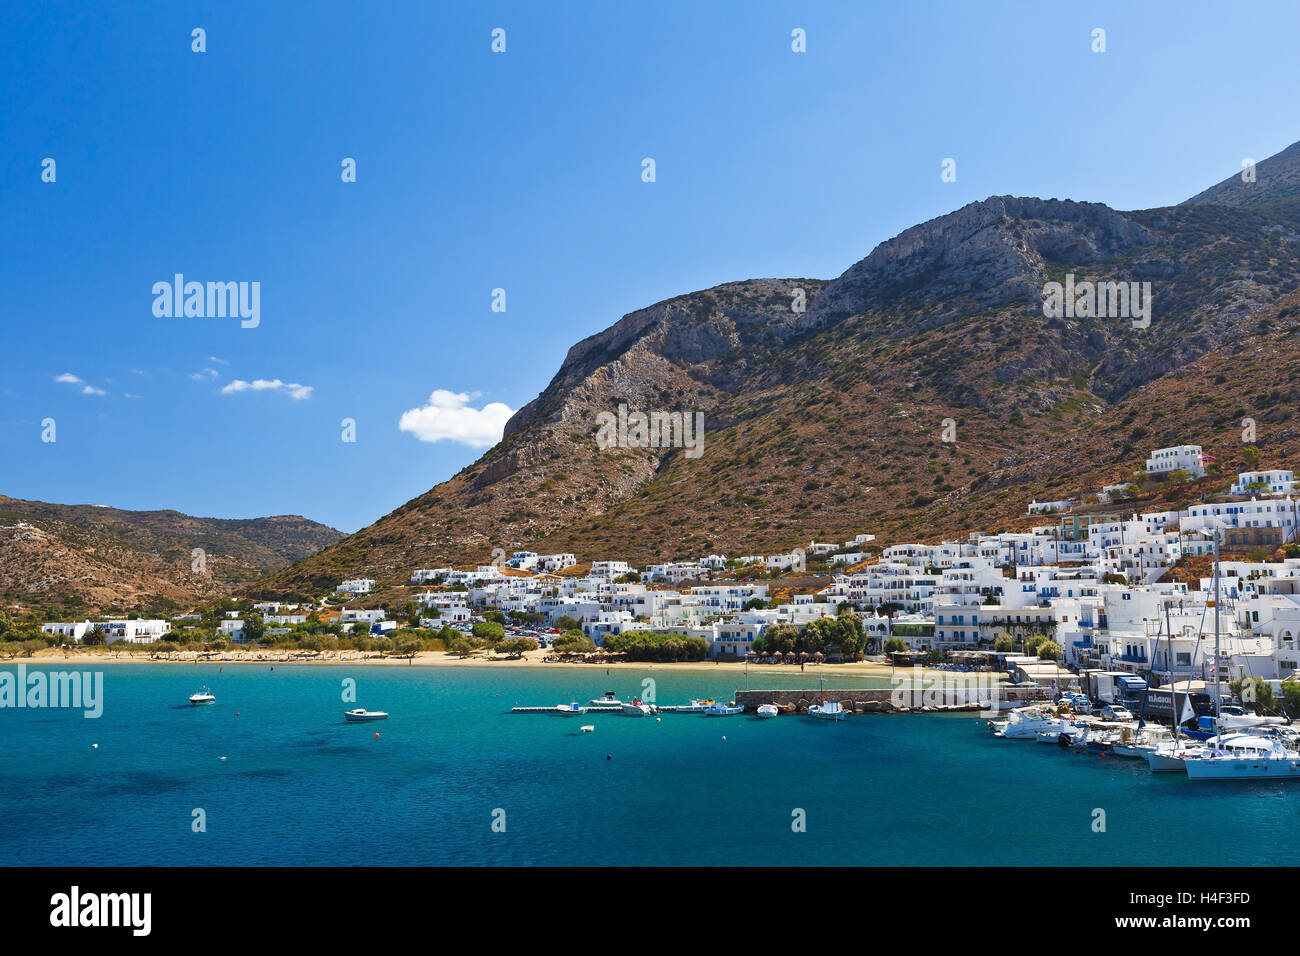 Porto di Kamares a Sifnos Island, Grecia Foto stock - Alamy